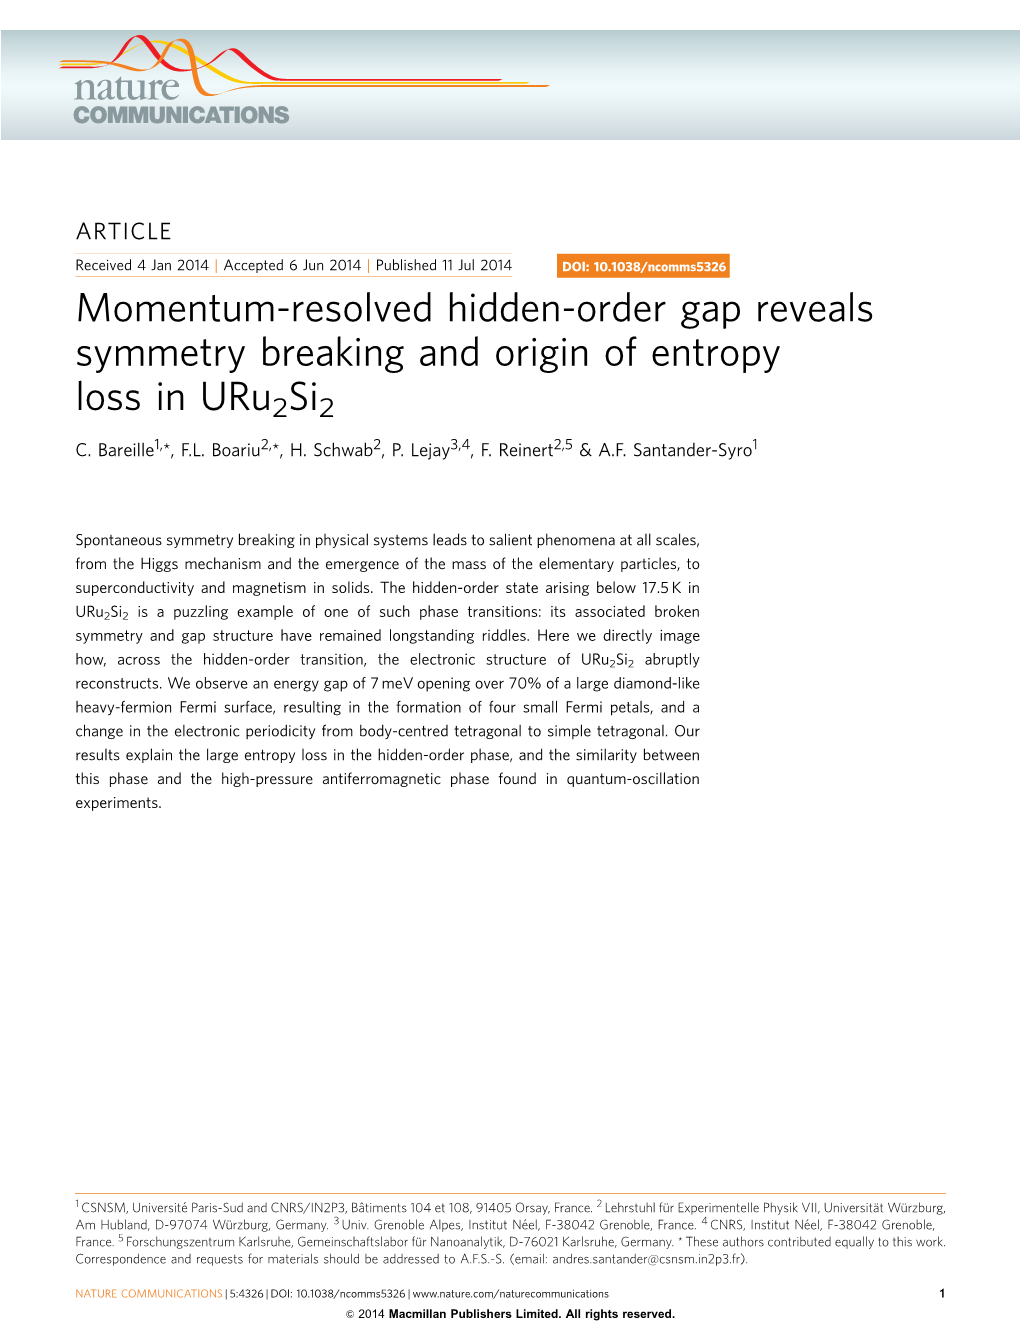 Momentum-Resolved Hidden-Order Gap Reveals Symmetry Breaking and Origin of Entropy Loss in Uru2si2